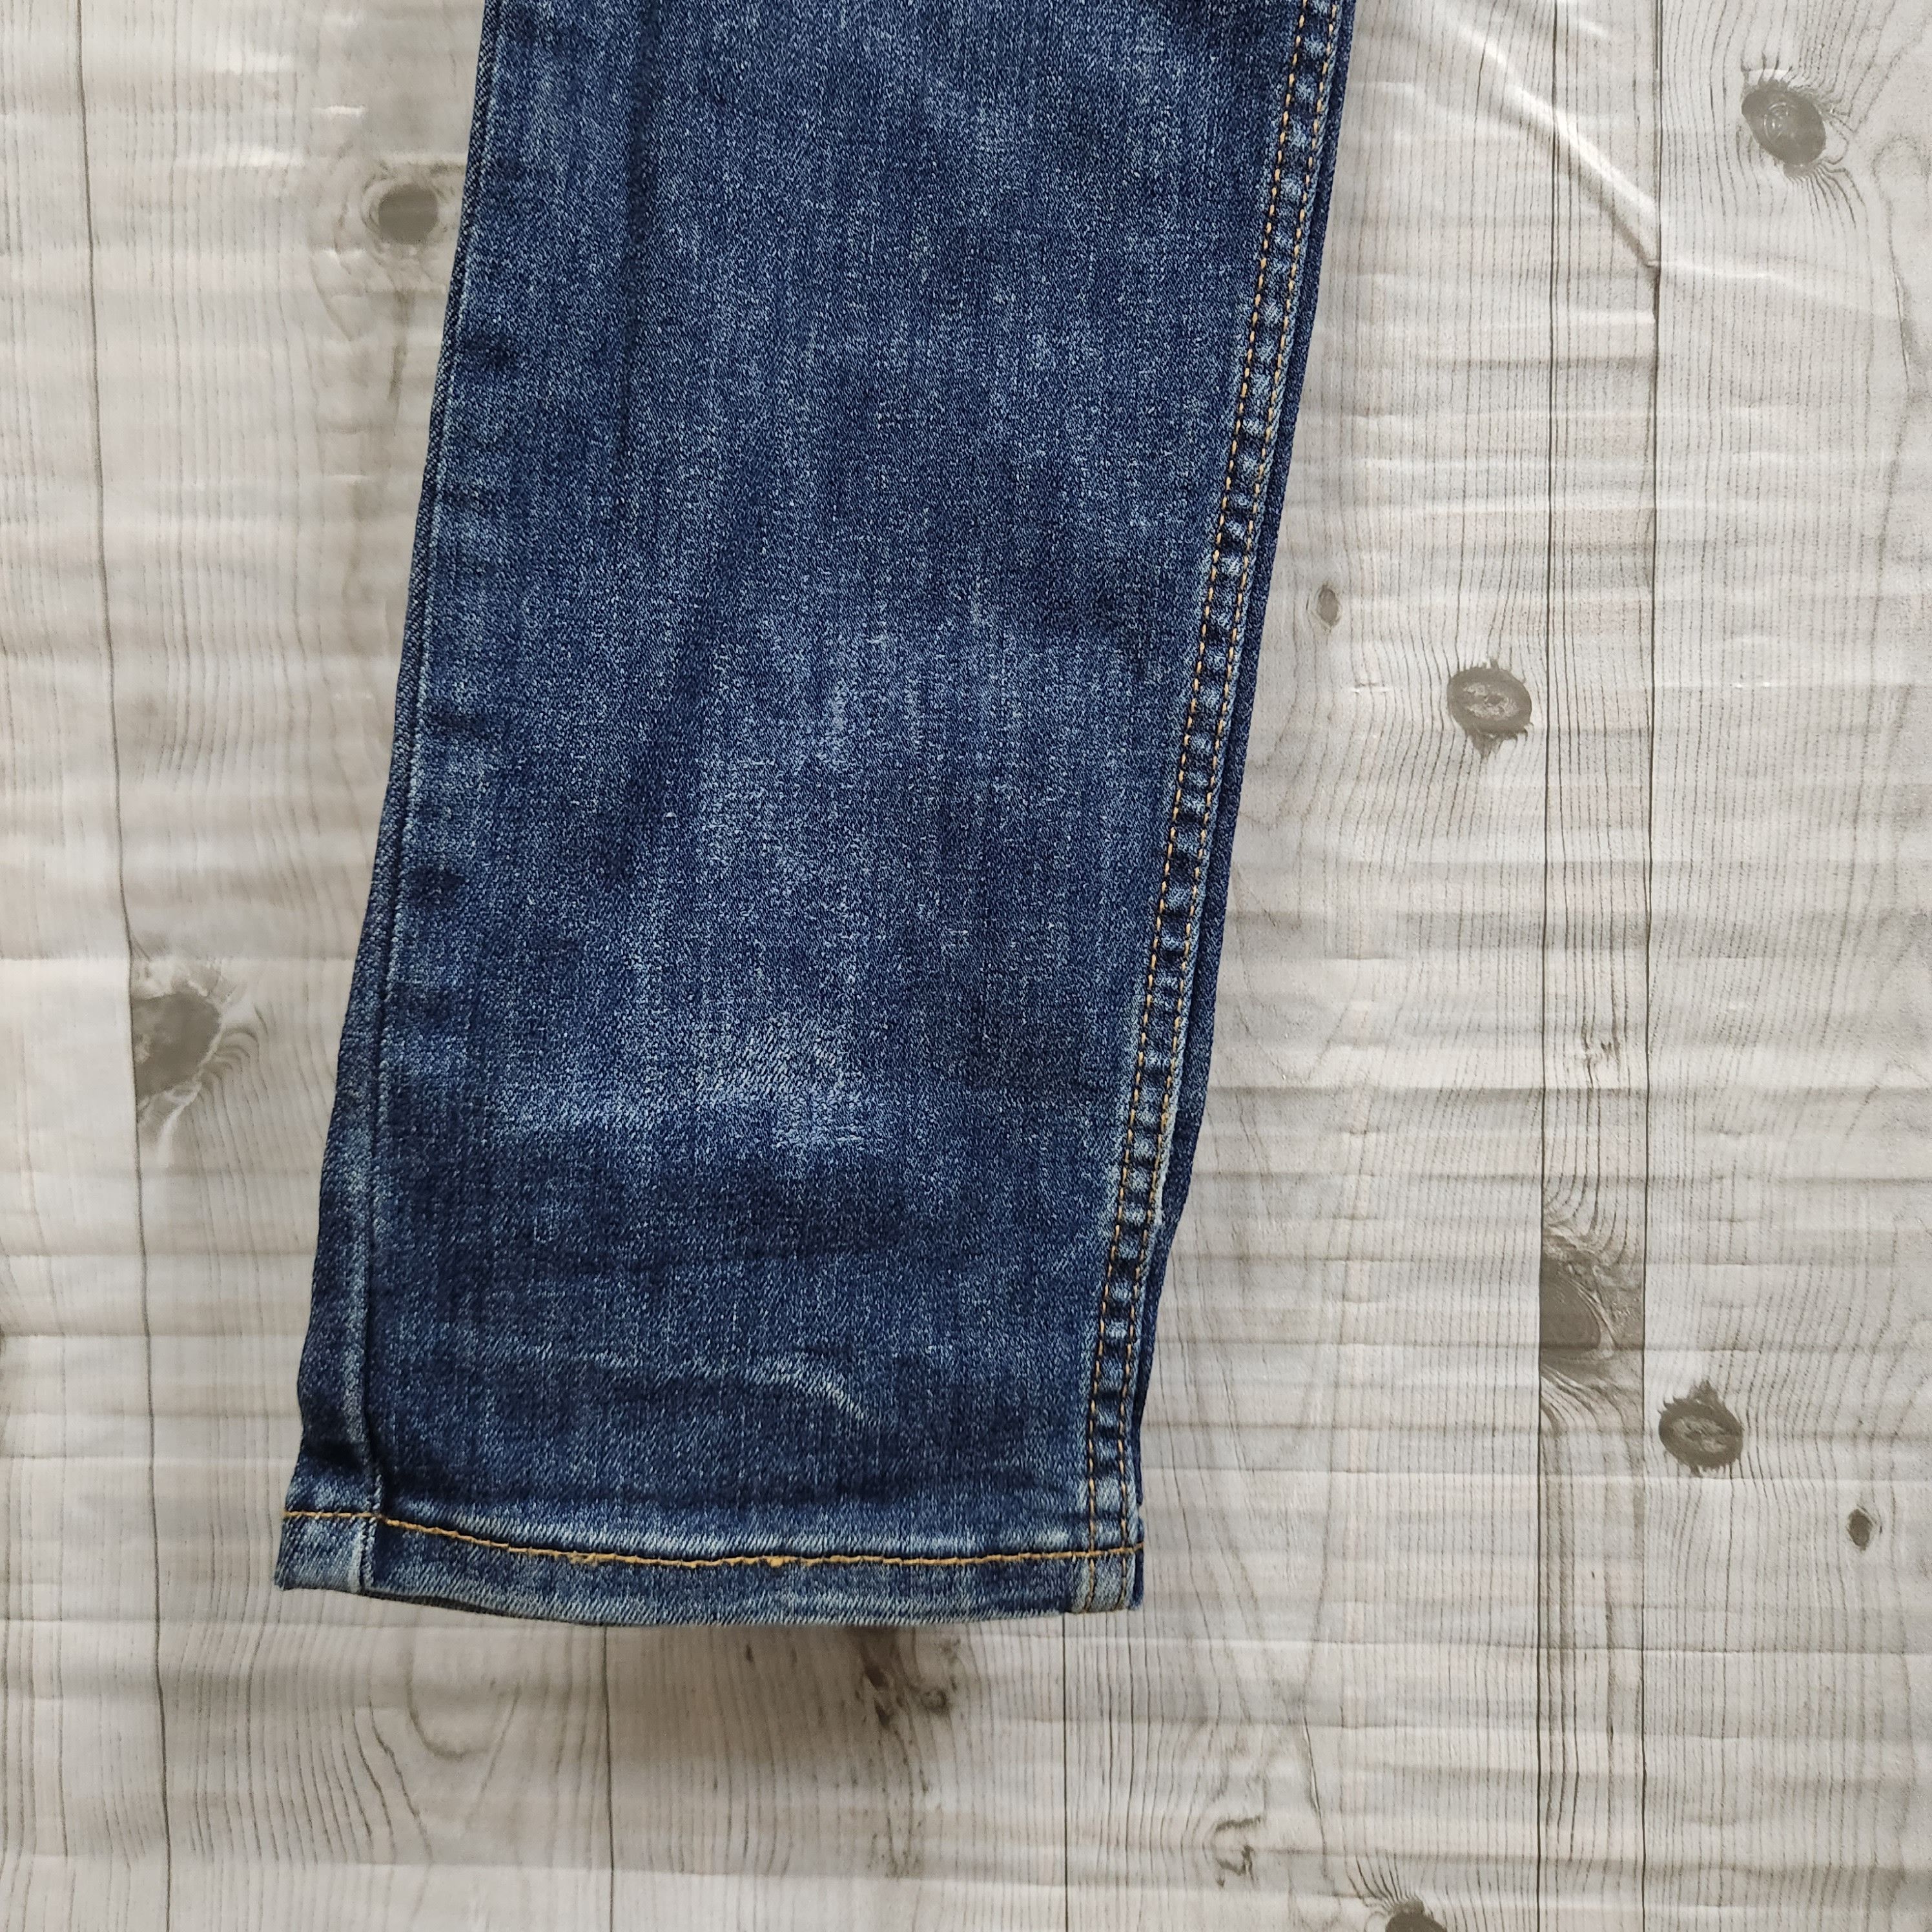 Levi's 510 Blue Denim Jeans - 15